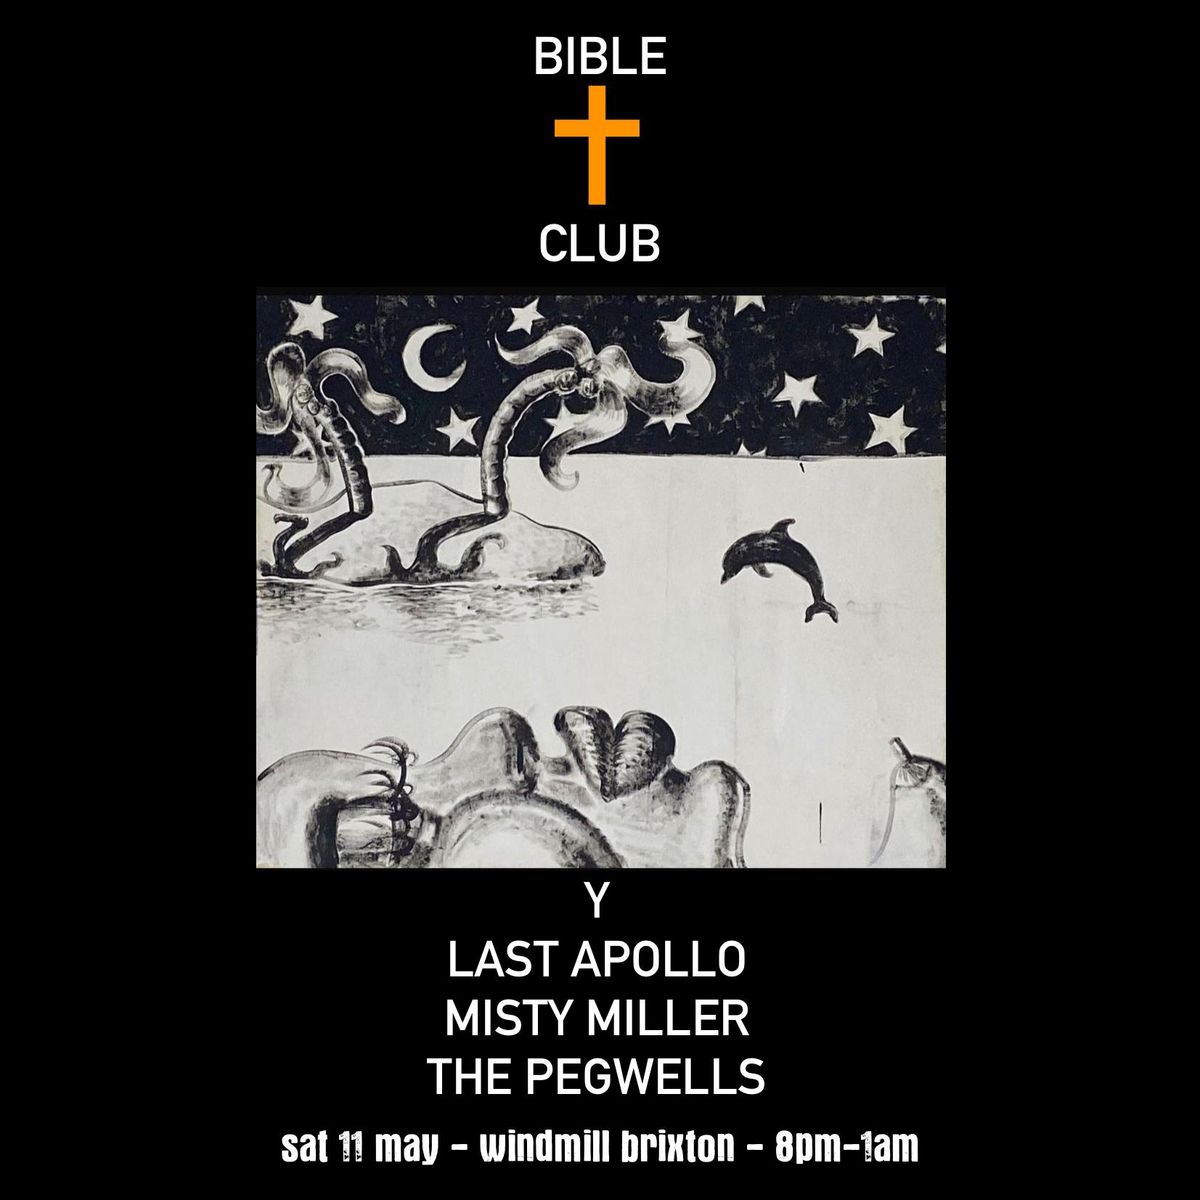 "Bible Club" - Y, Last Apollo, Misty Miller, The Pegwells